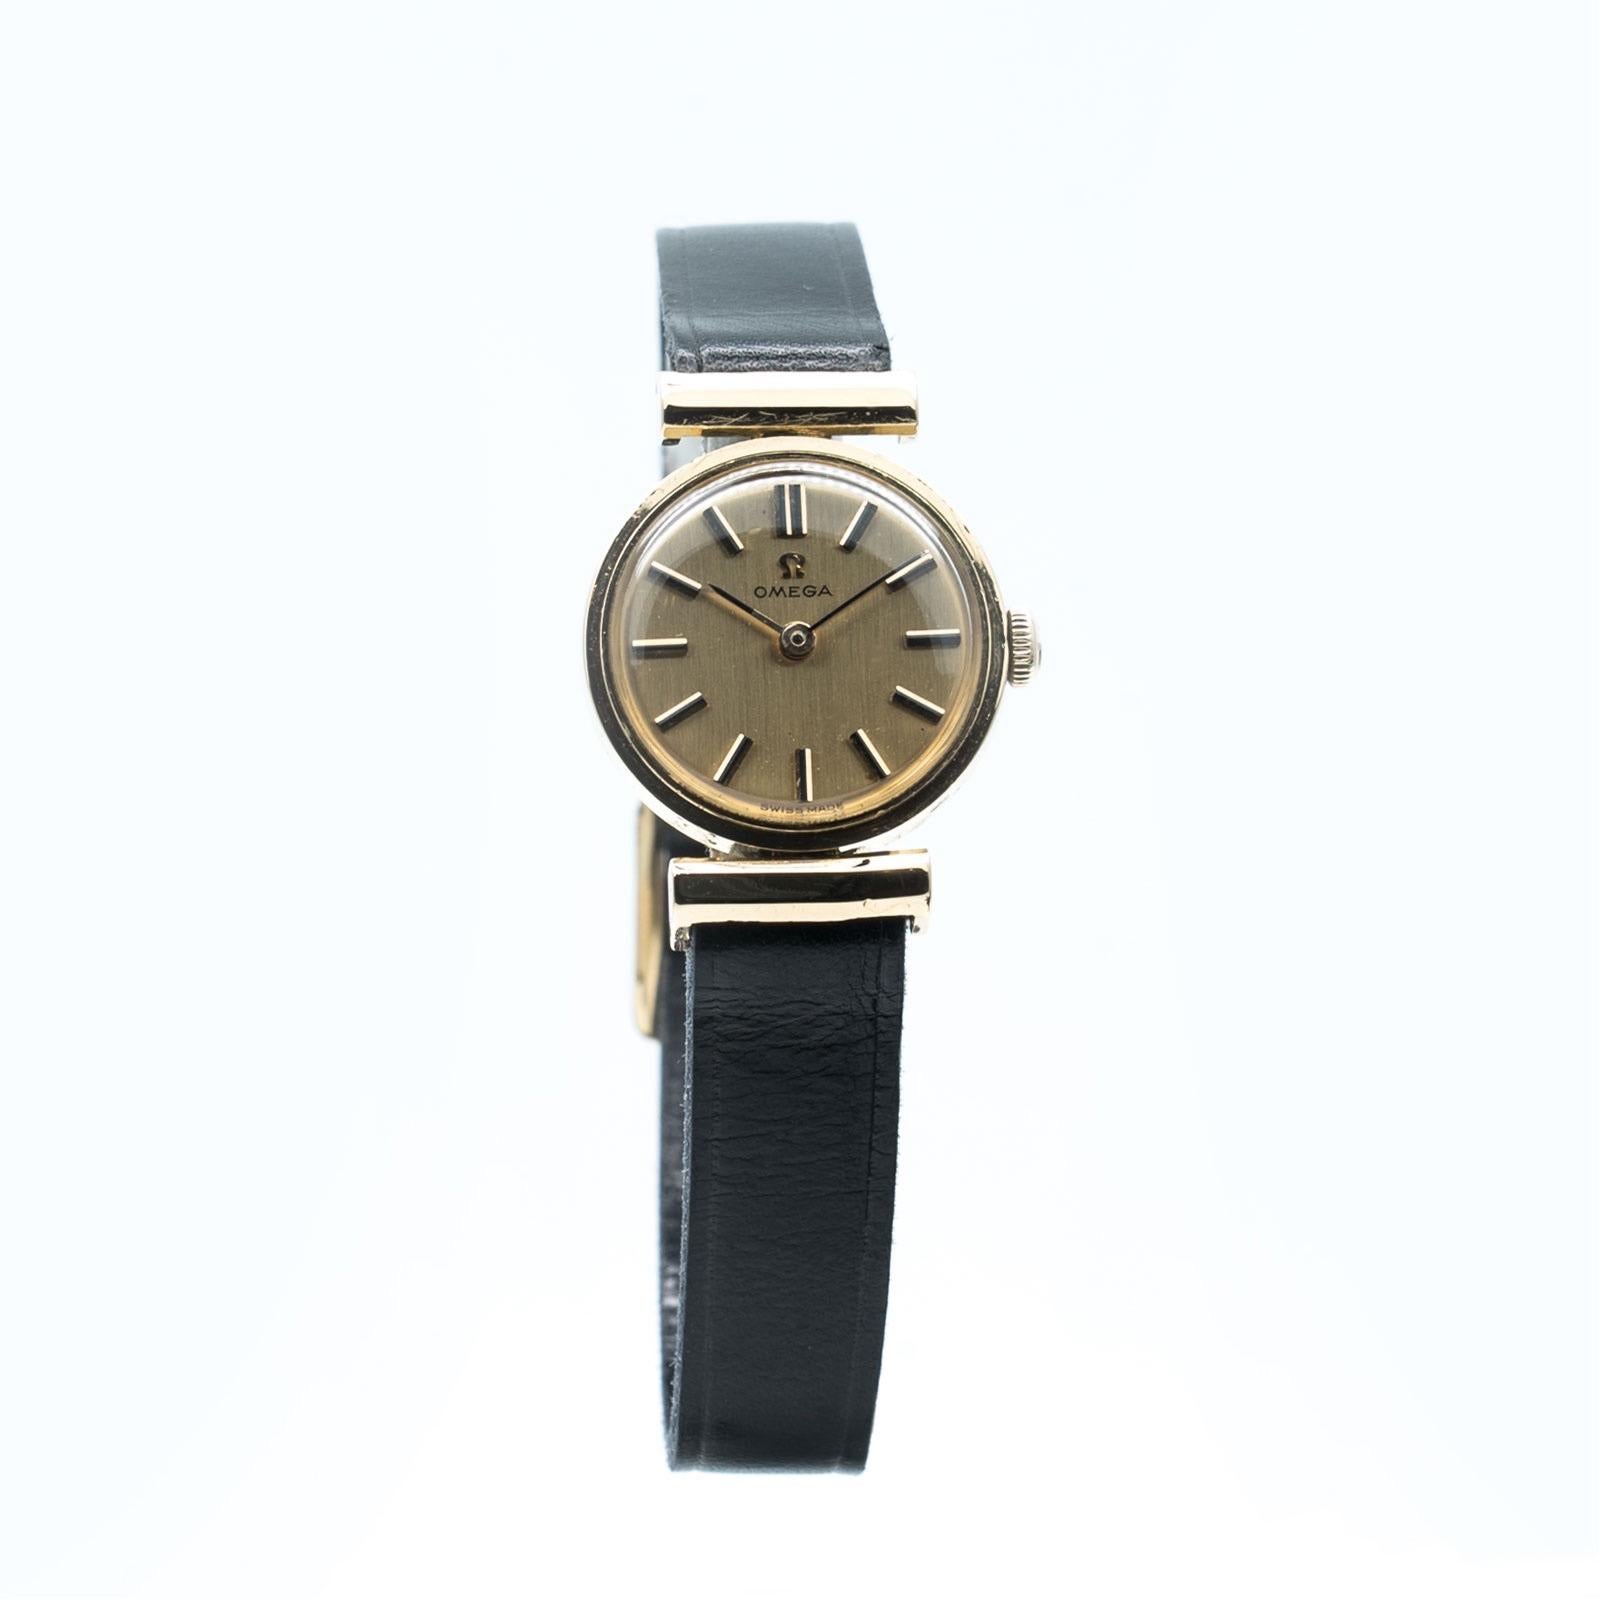 Manuelle Damen Omega Gold Uhr:: um 1960:: Swiss Made:: Bewertet (Mitte des 20. Jahrhunderts)